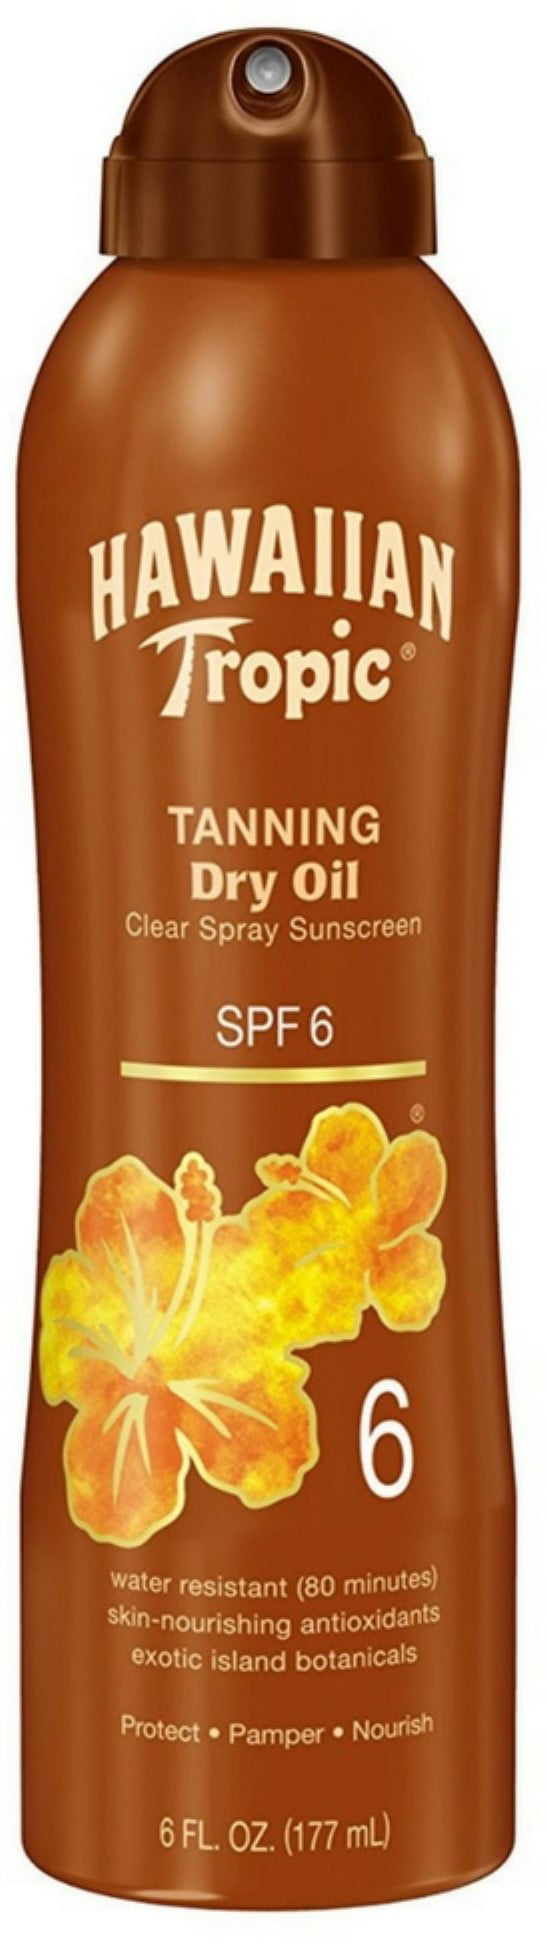 Hawaiian Tropic Golden Tanning Dry Oil SPF 6 6 oz (Pack of 2) - Walmart.com...